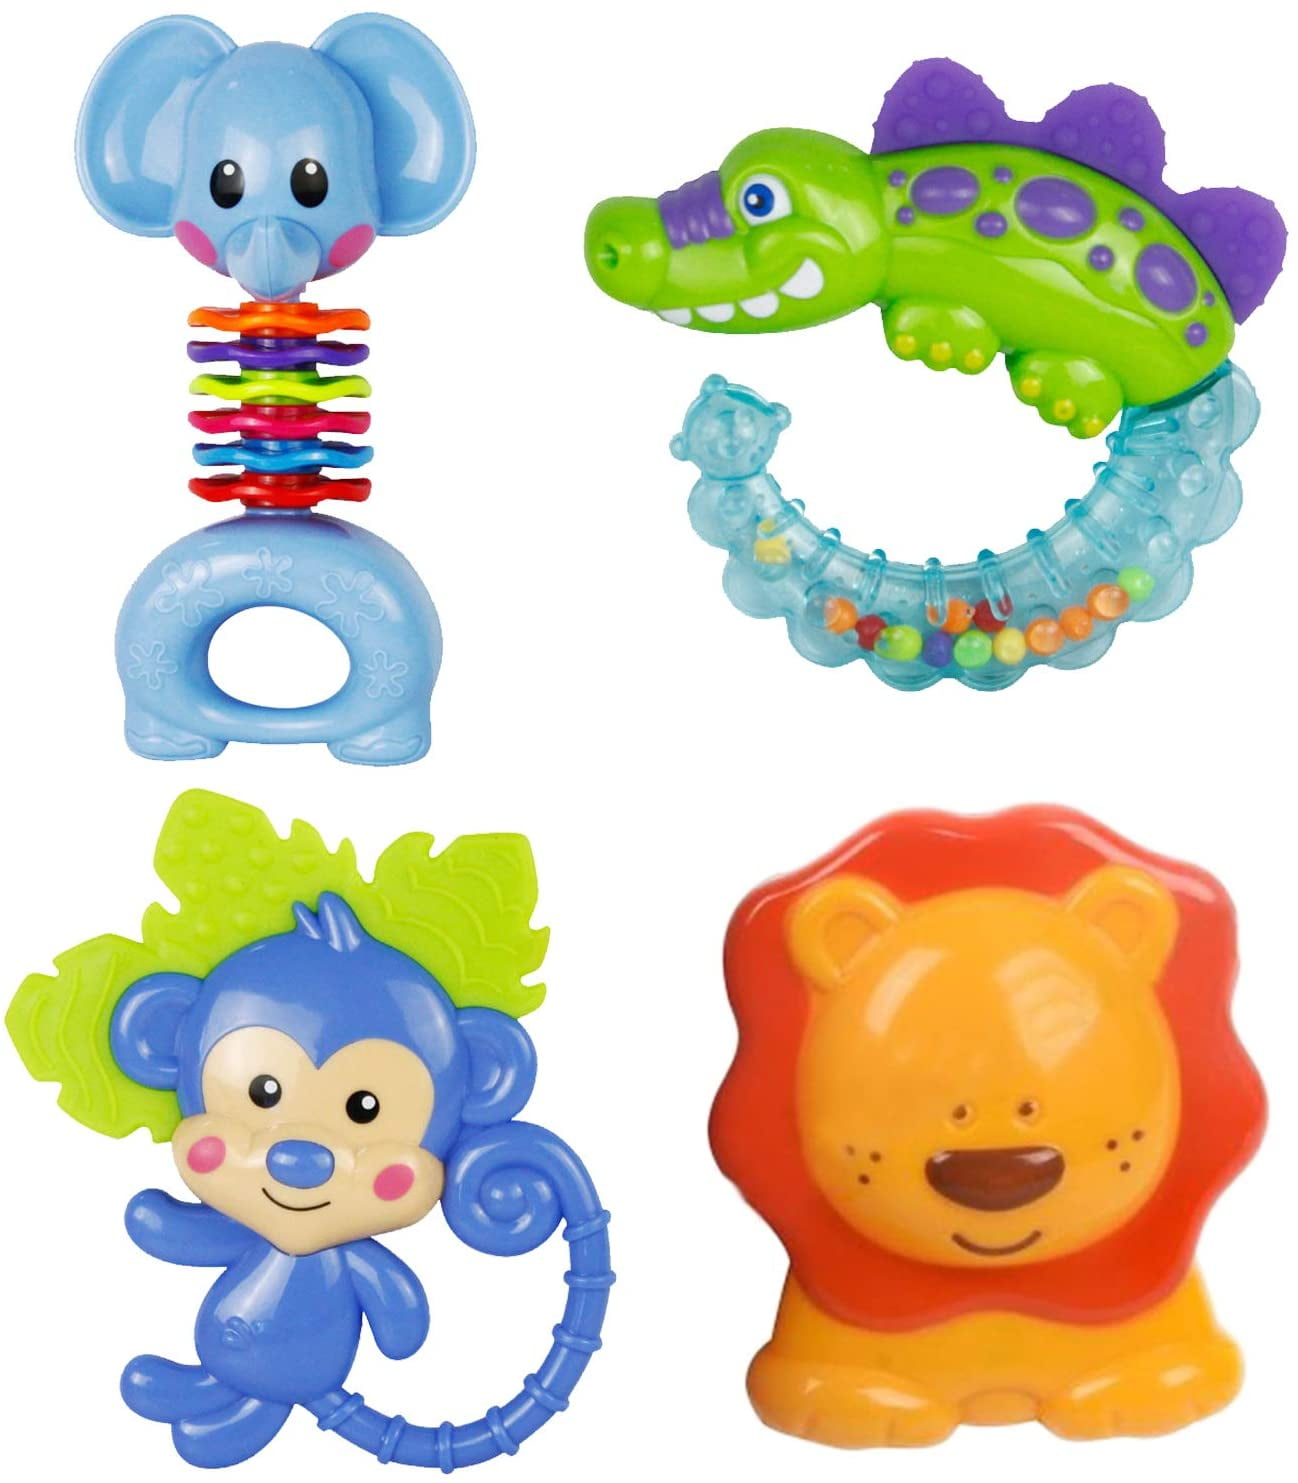 Shaking Baby Rattle Toys Pram Phone Keys Gift Toddler Educational kids Musical 